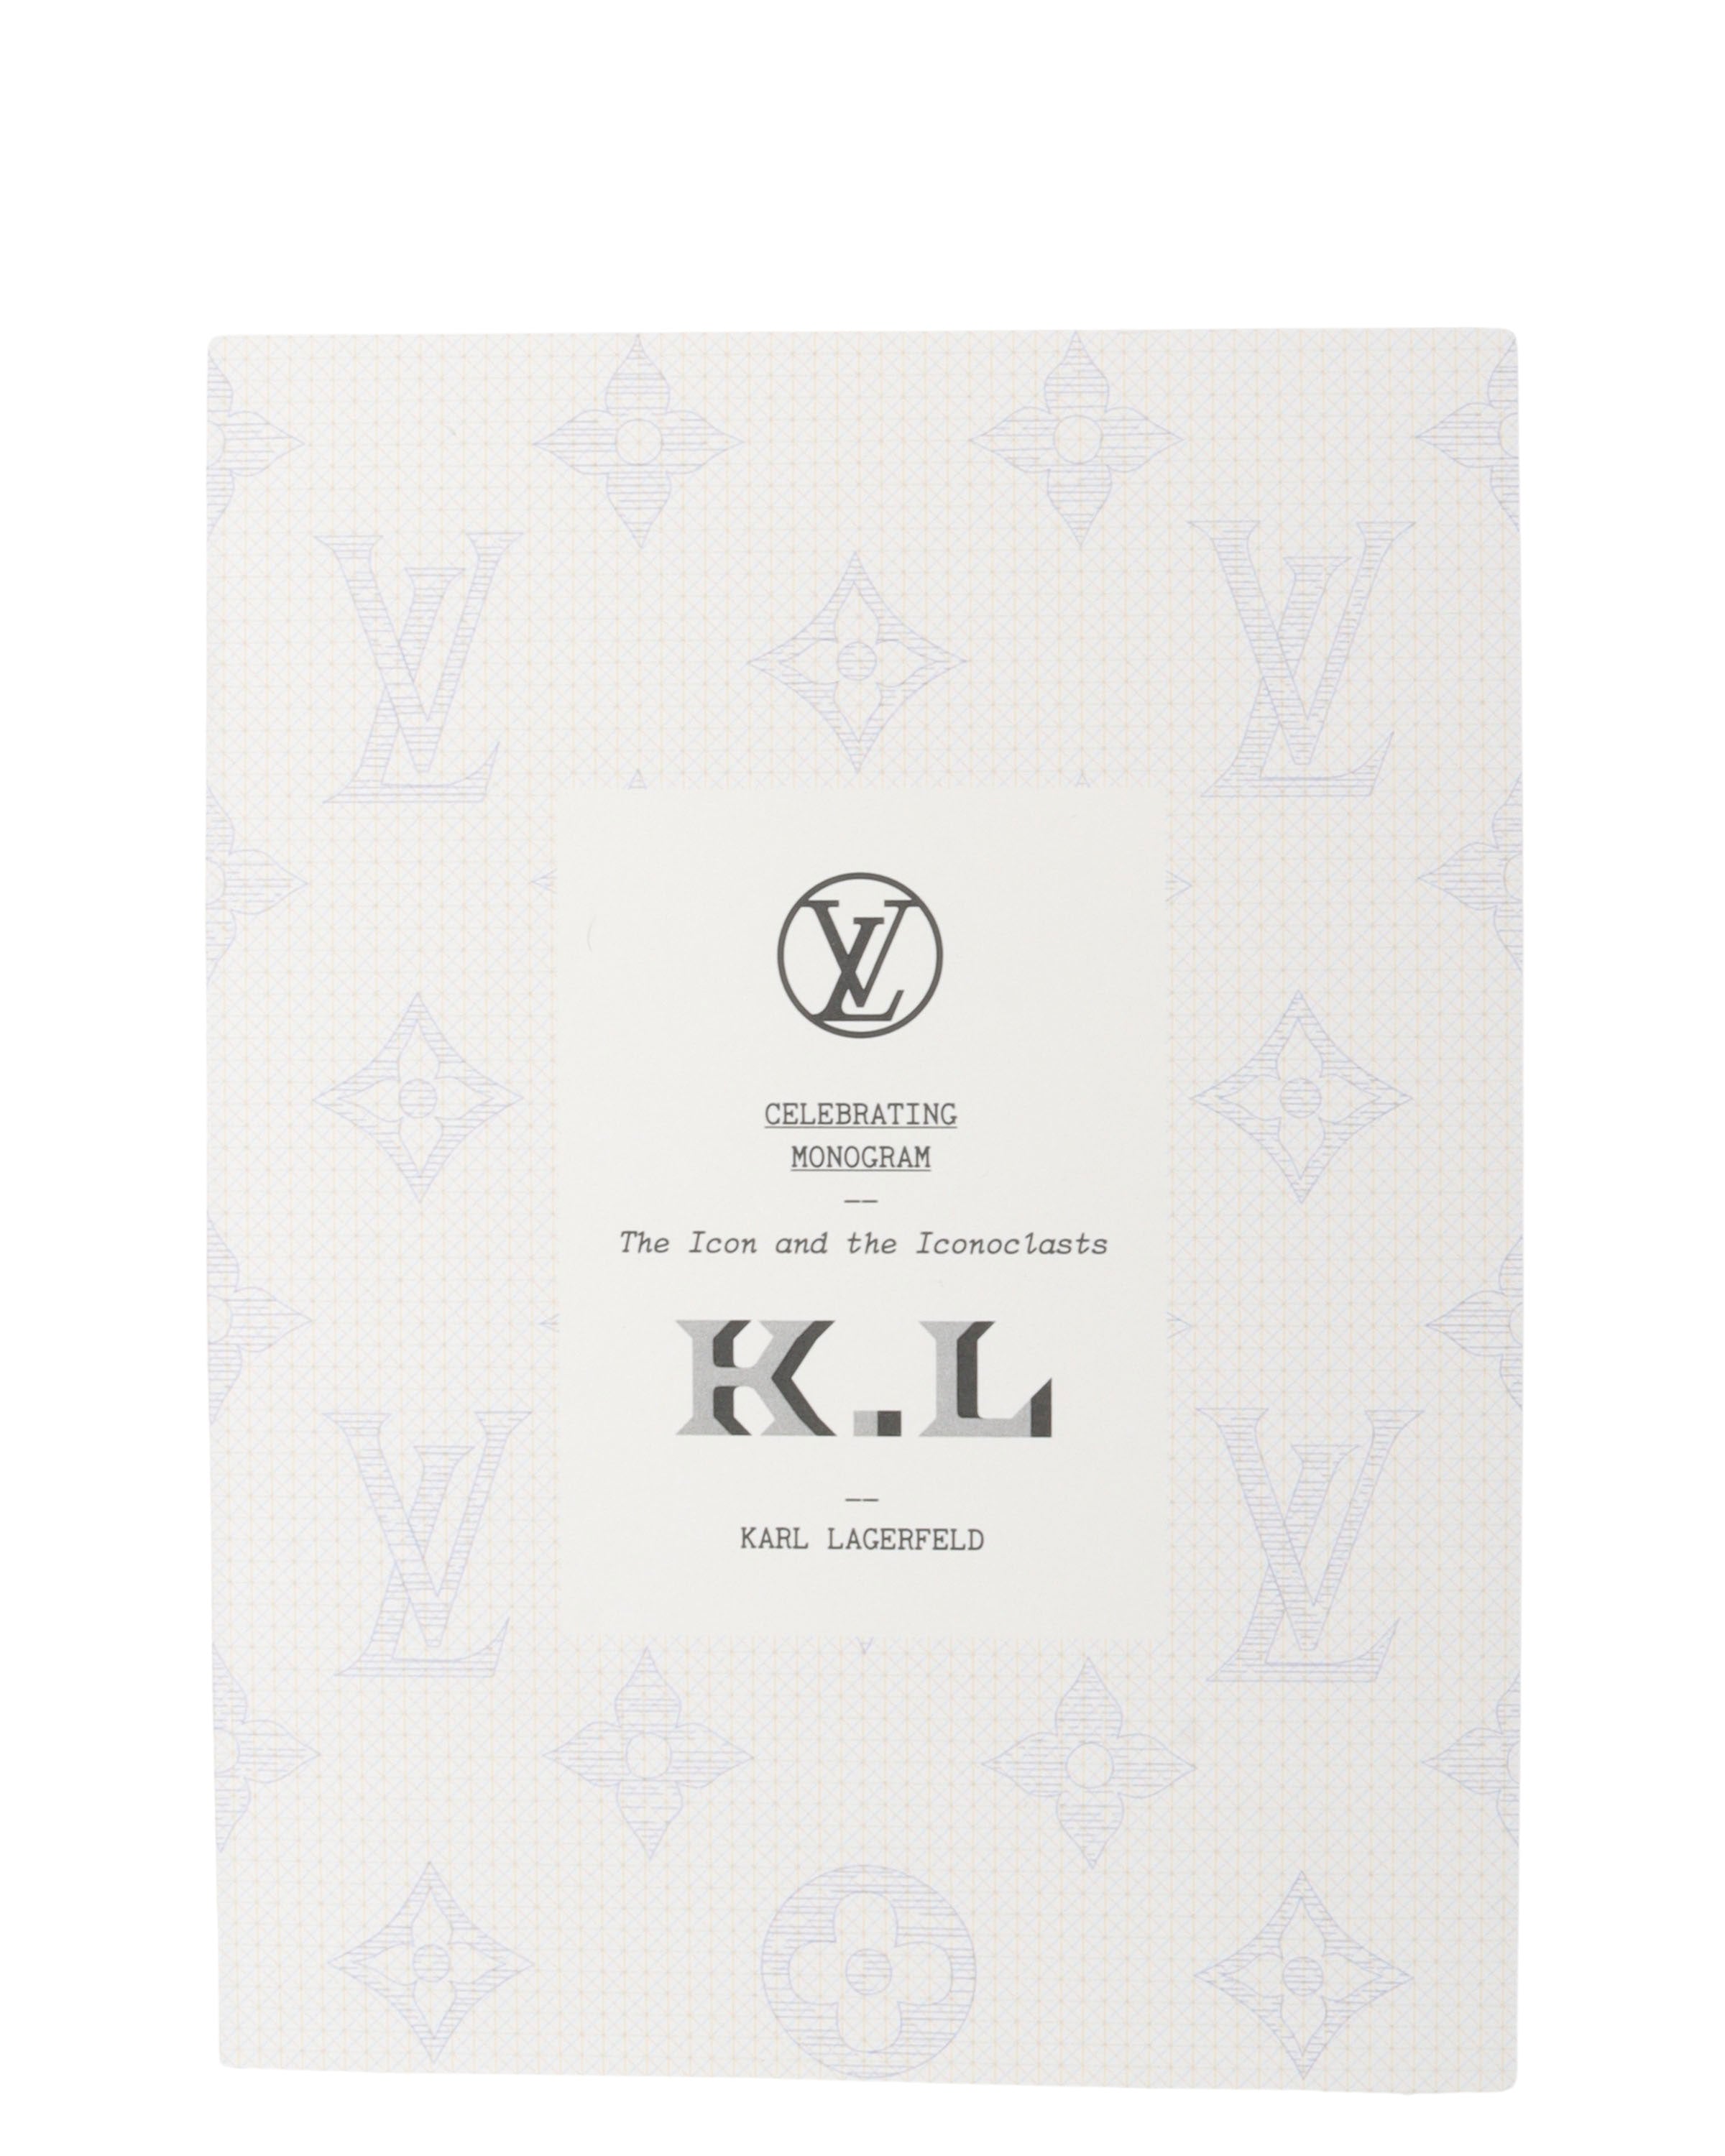 Louis Vuitton - Karl Lagerfeld Boxing Gloves.#karllagerfeld